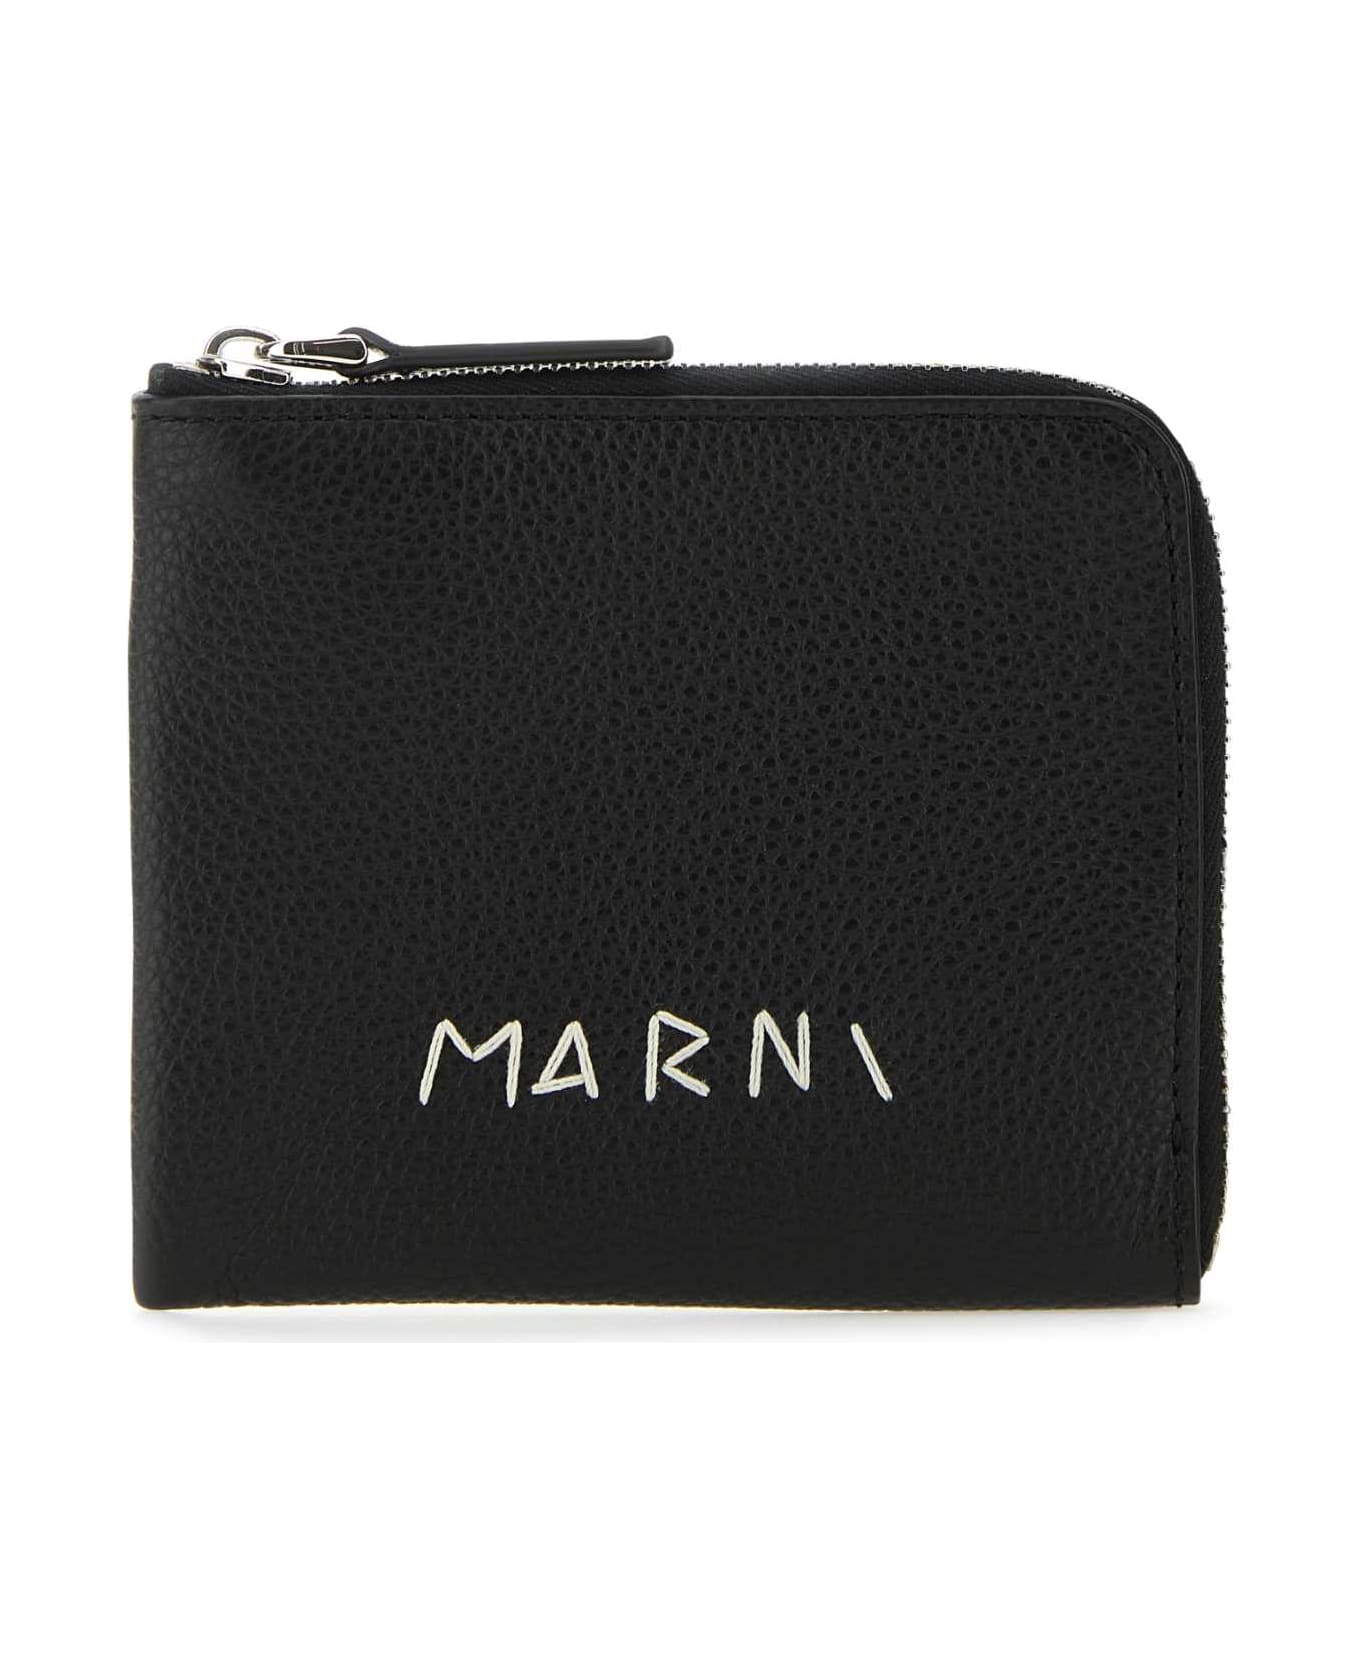 Marni Black Leather Wallet - BLACK